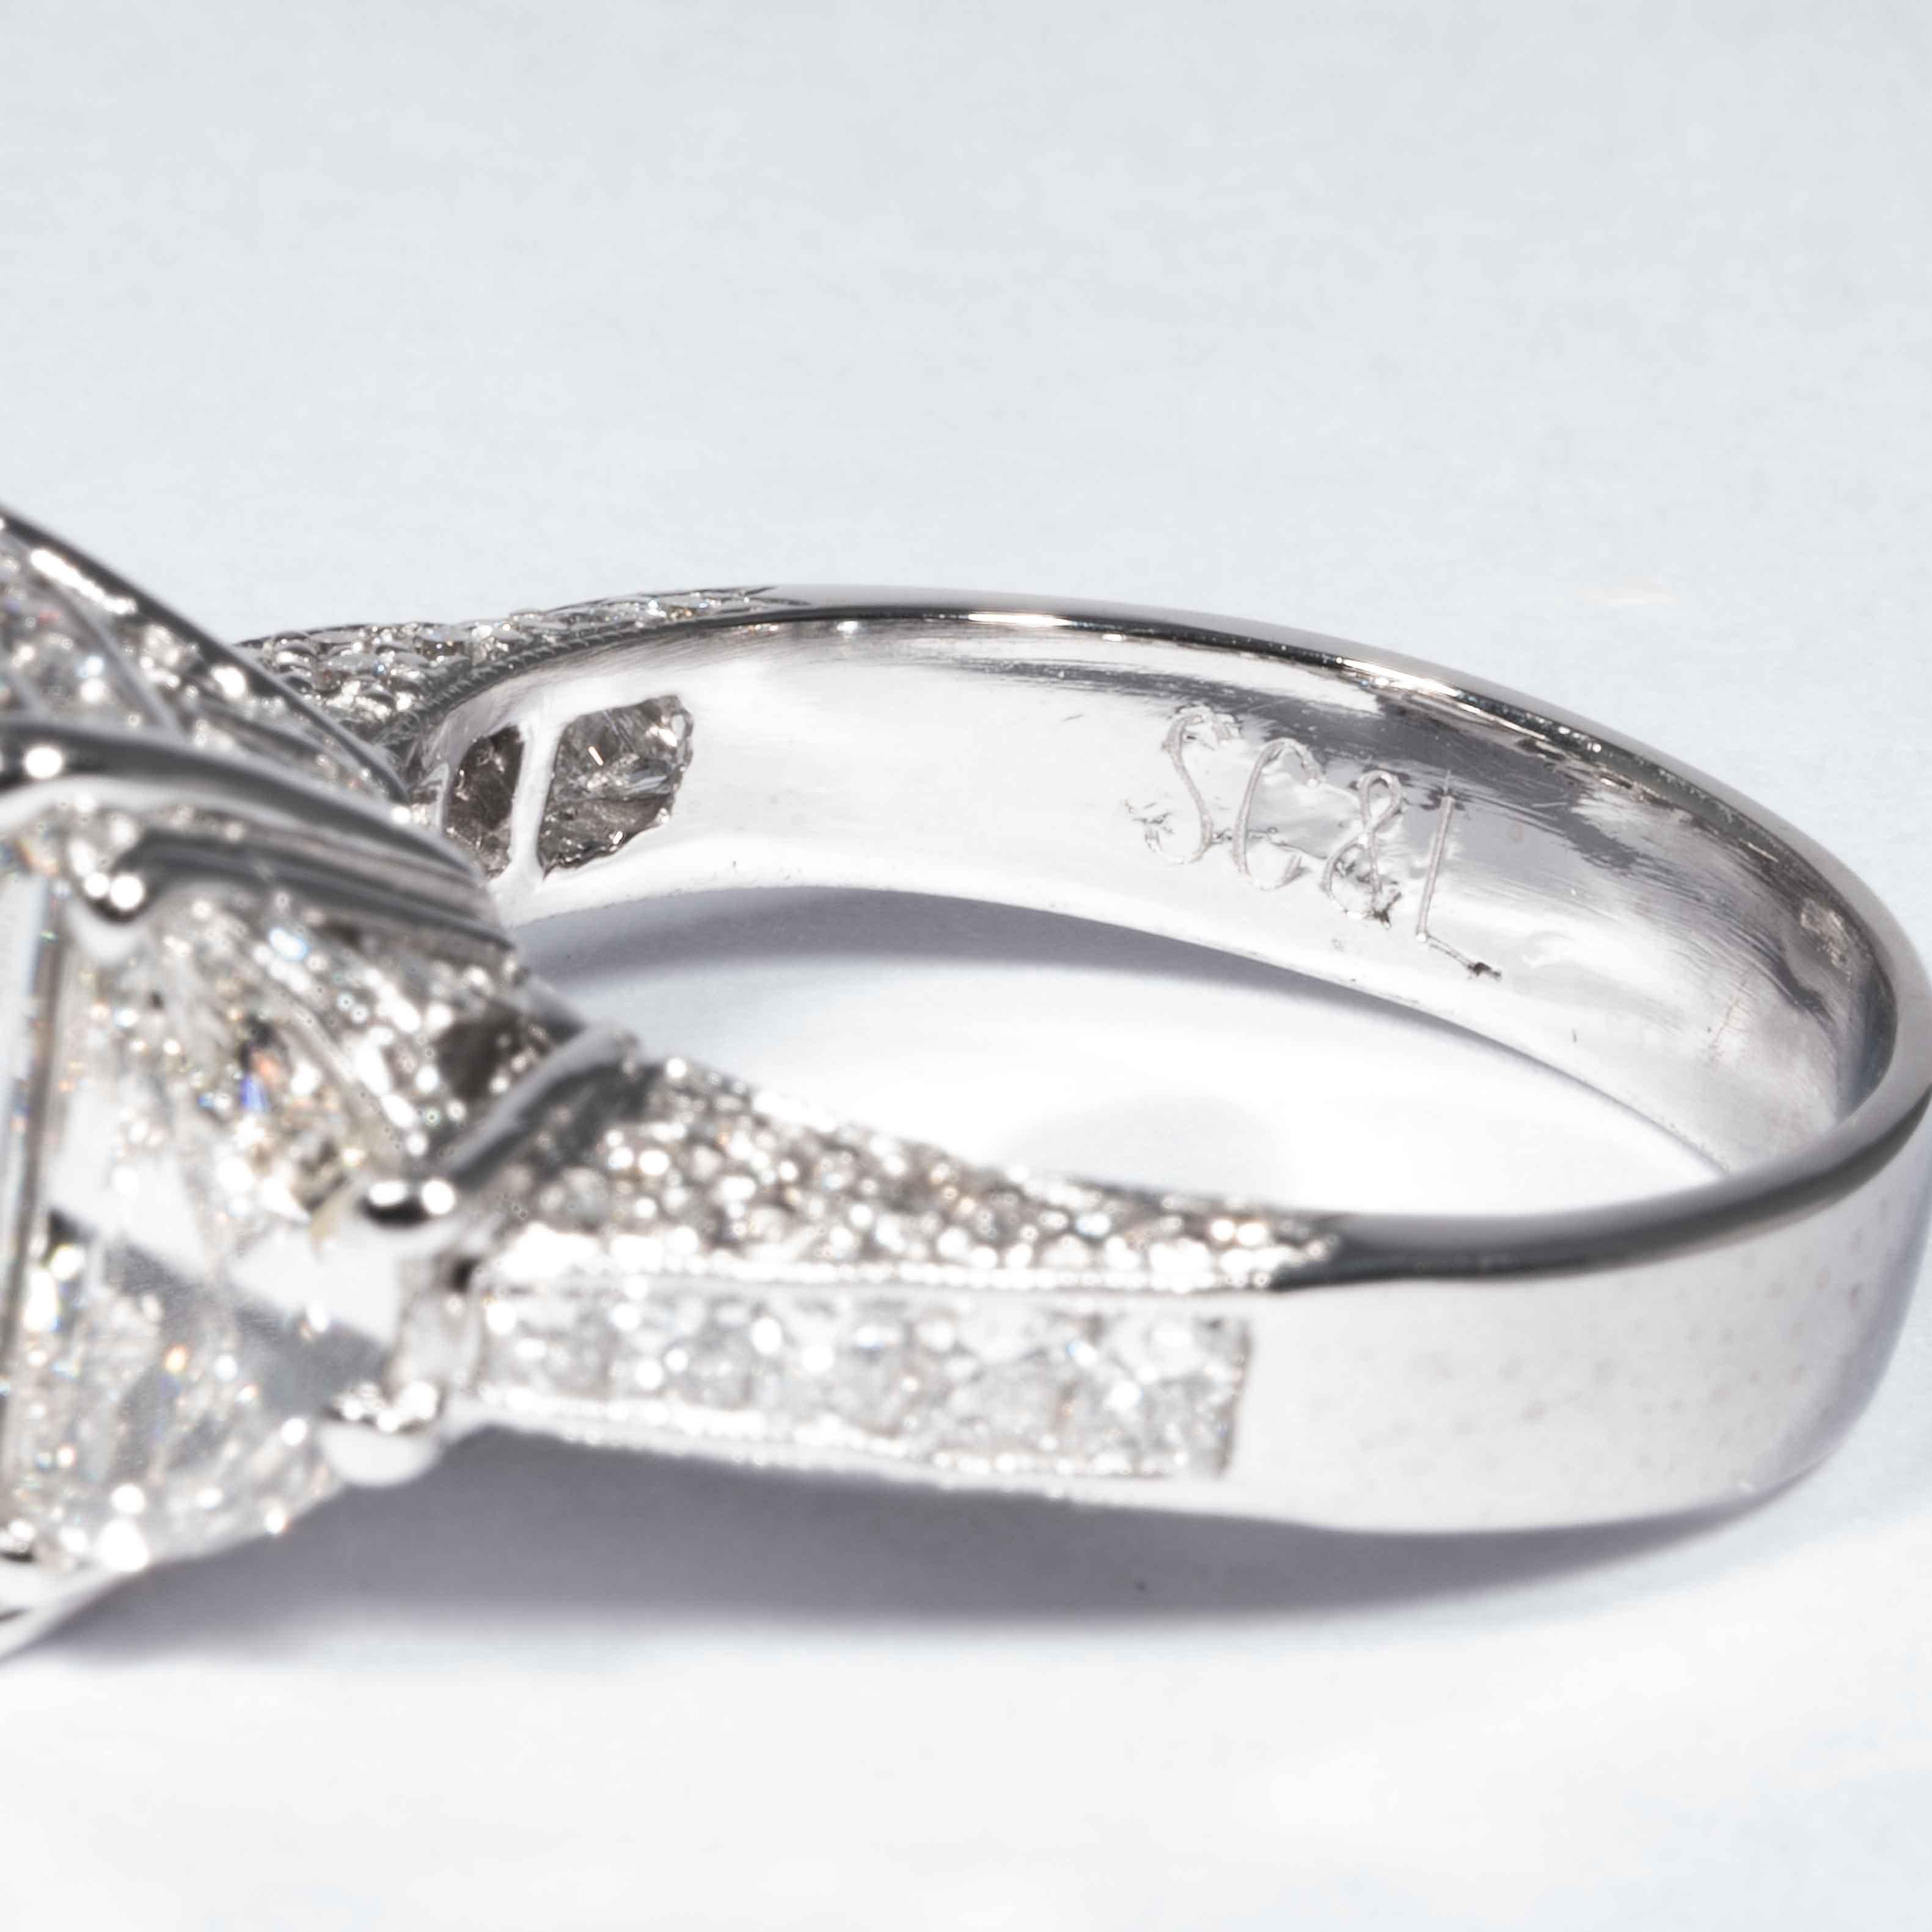 Shreve, Crump & Low GIA Certified 5.07 Carat I VS2 Radiant Cut Diamond Plat Ring For Sale 2